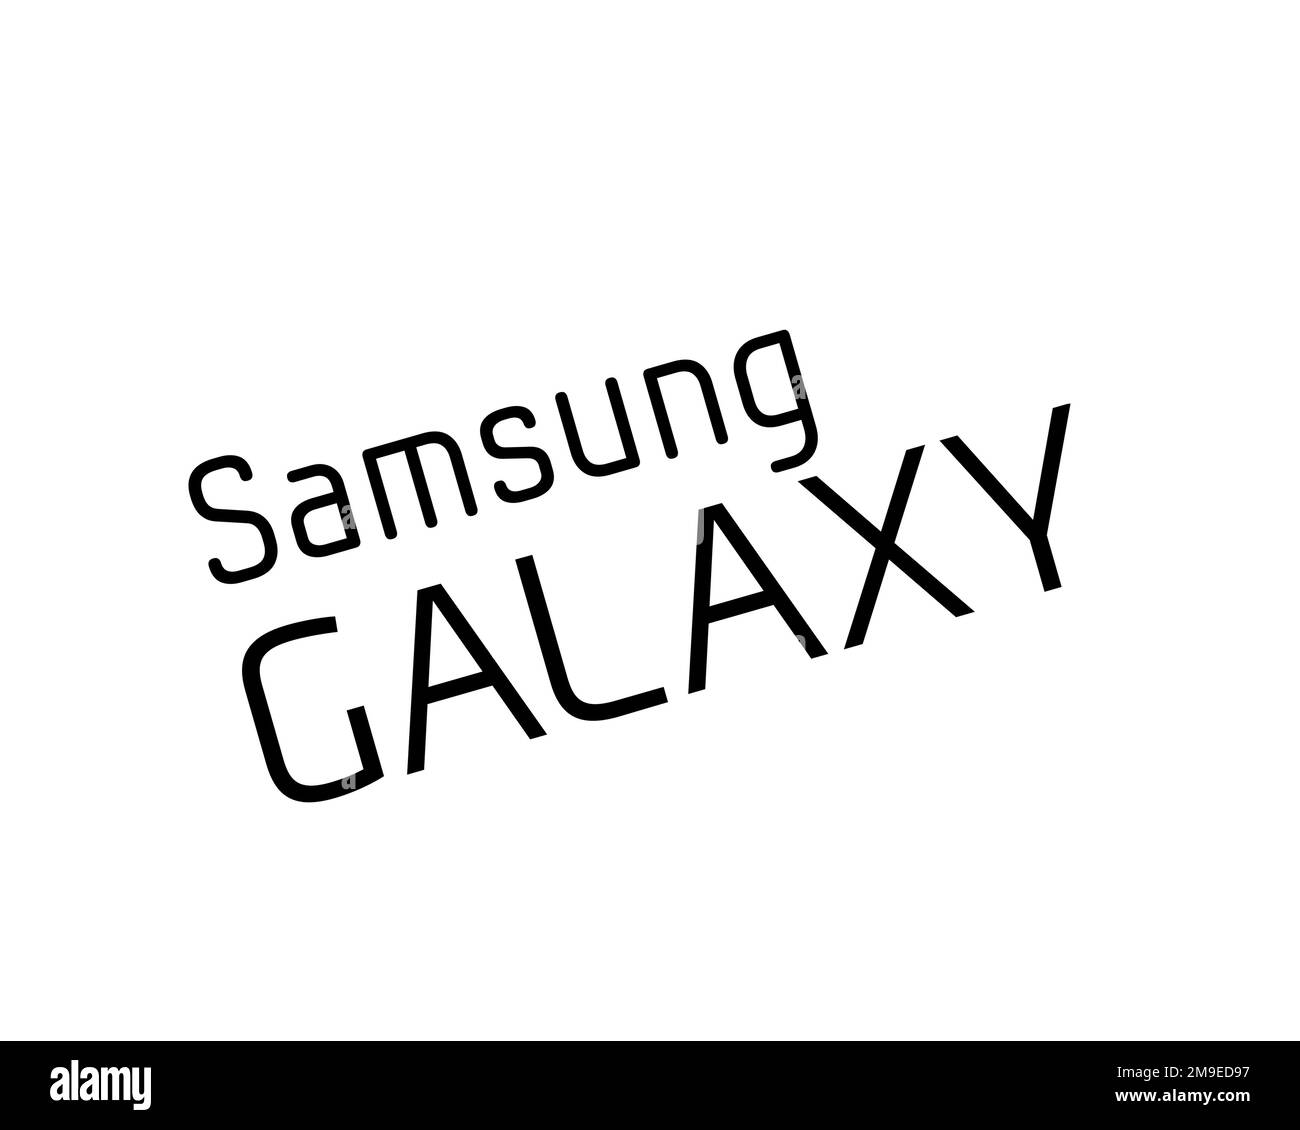 Samsung Galaxy original, rotated logo, white background Stock Photo